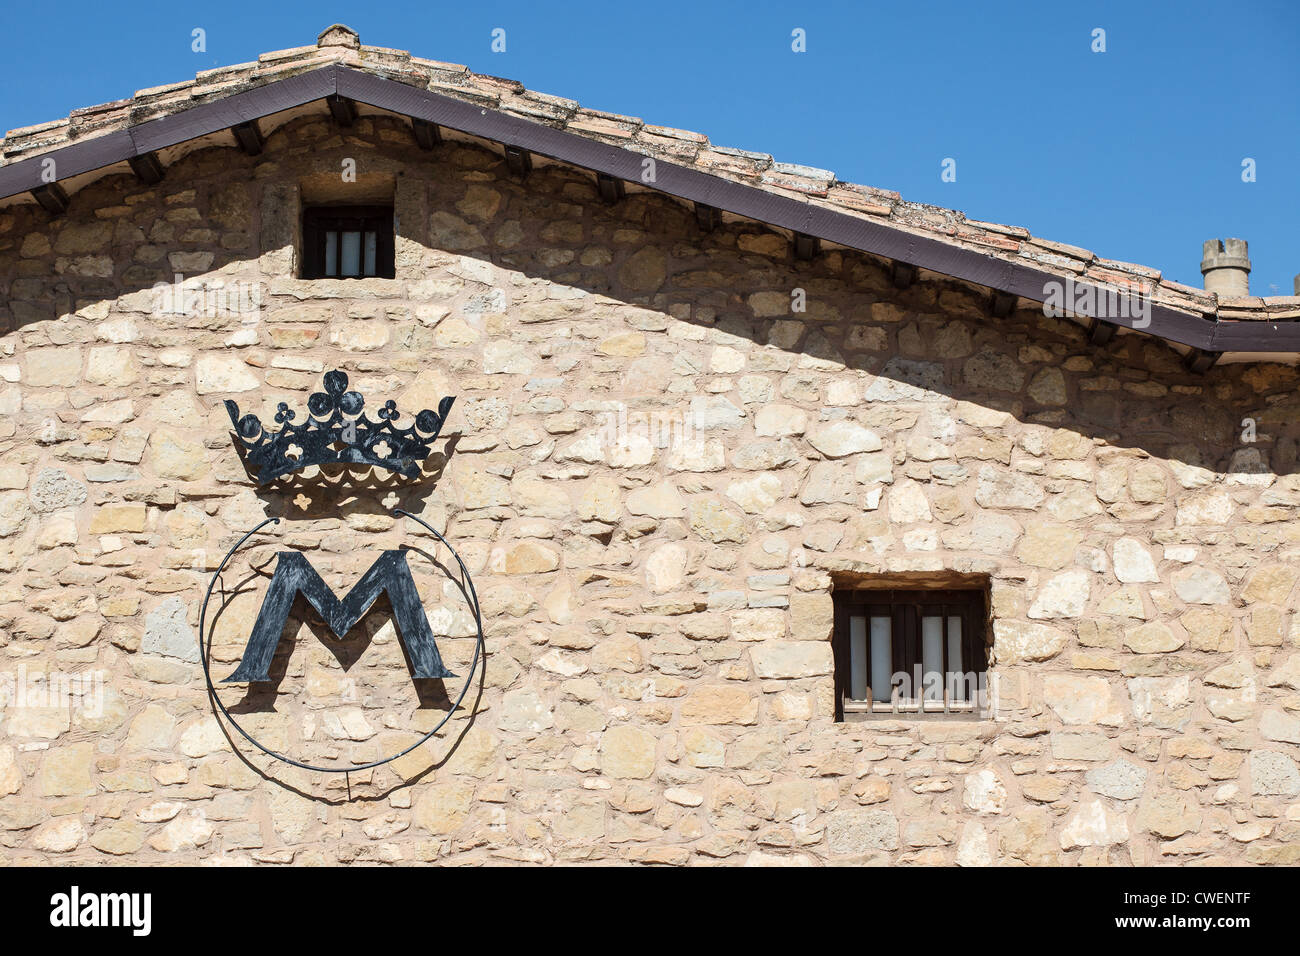 16/5/12 Marqués de Murrieta Winery, Finca Ygay, Logroño, La Rioja, Spain. Stock Photo